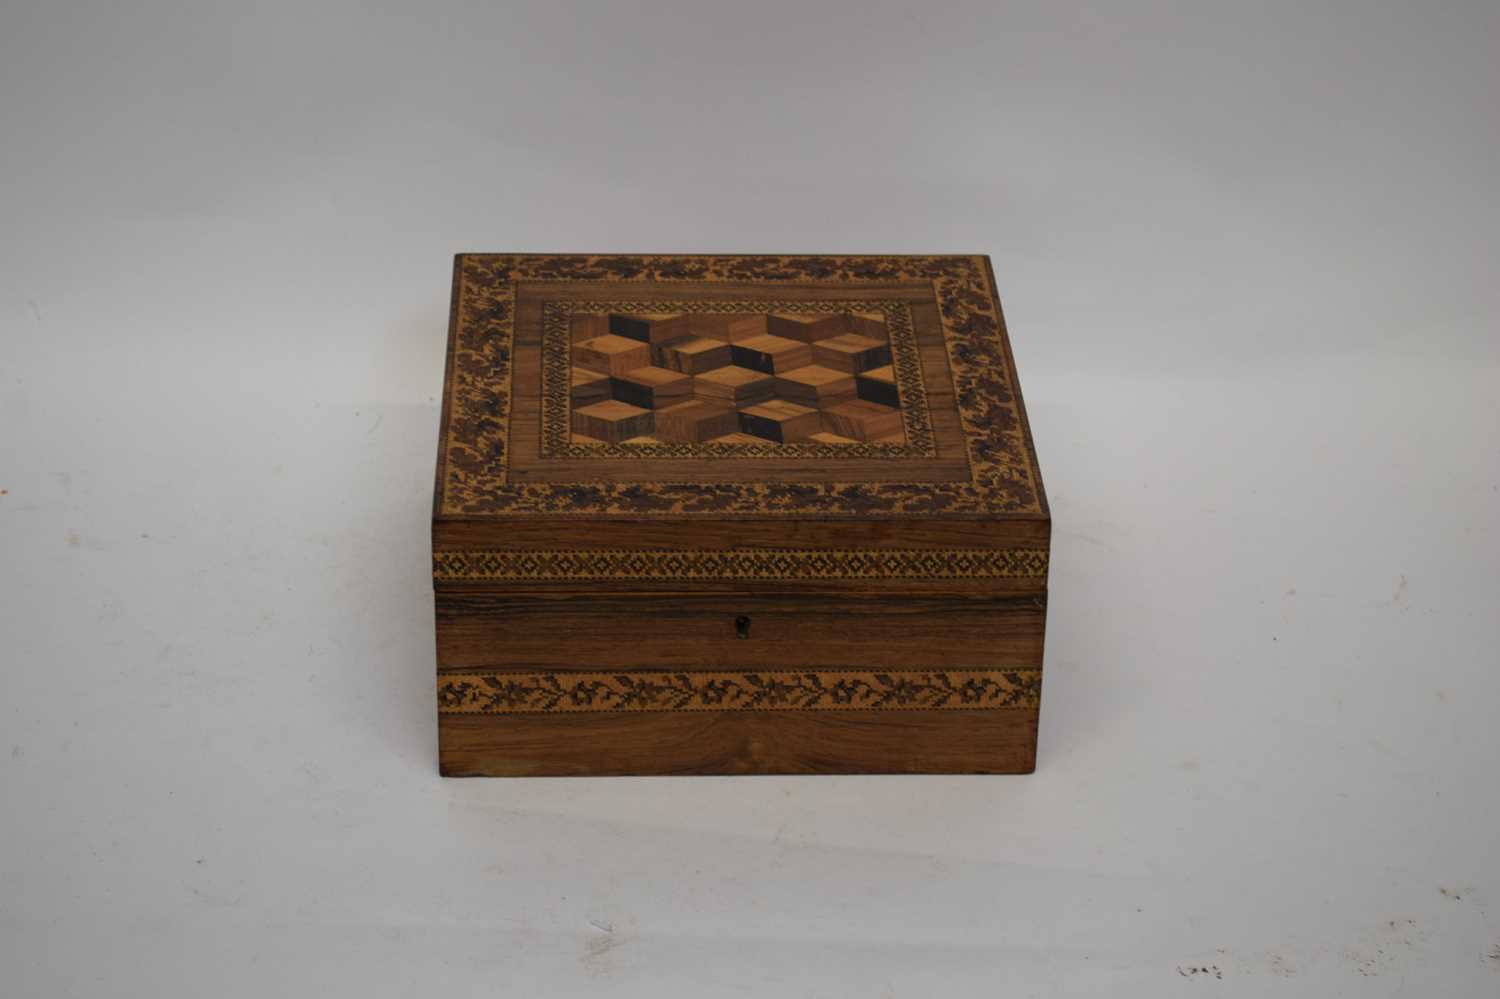 Lot 255 - 19th century Tunbridge ware box of hinged...